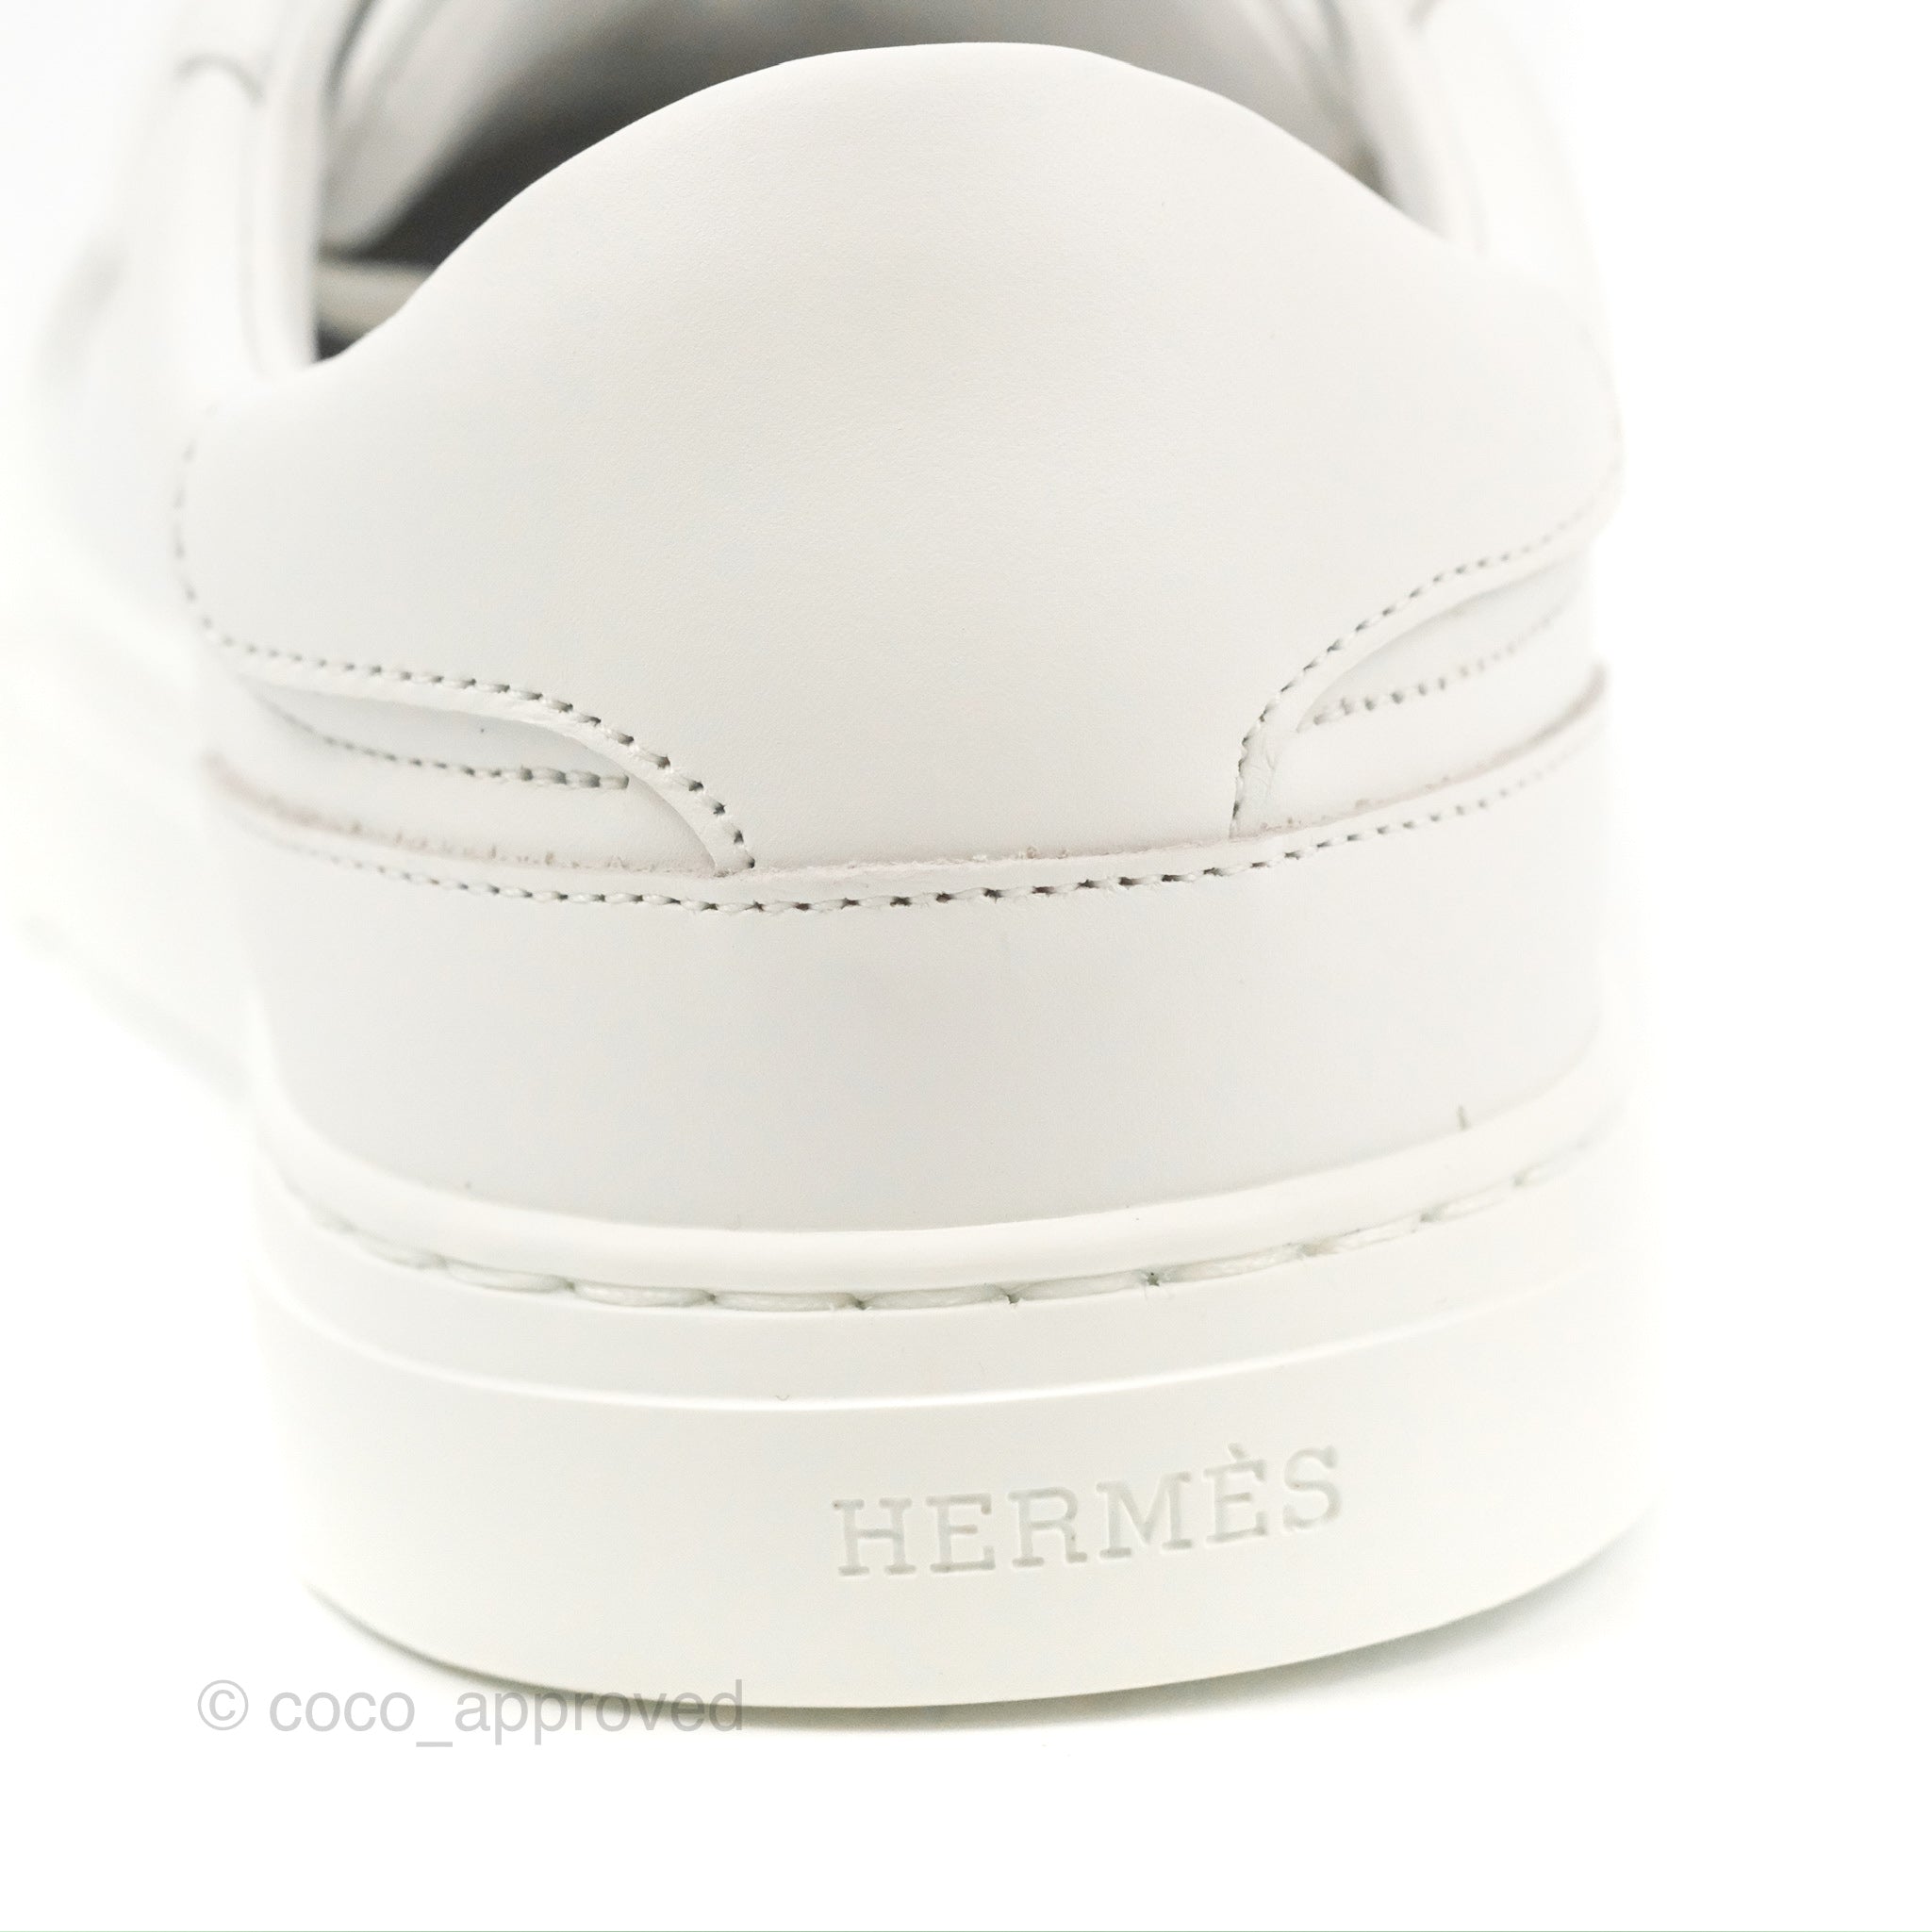 Hermès Men's Day Sneaker